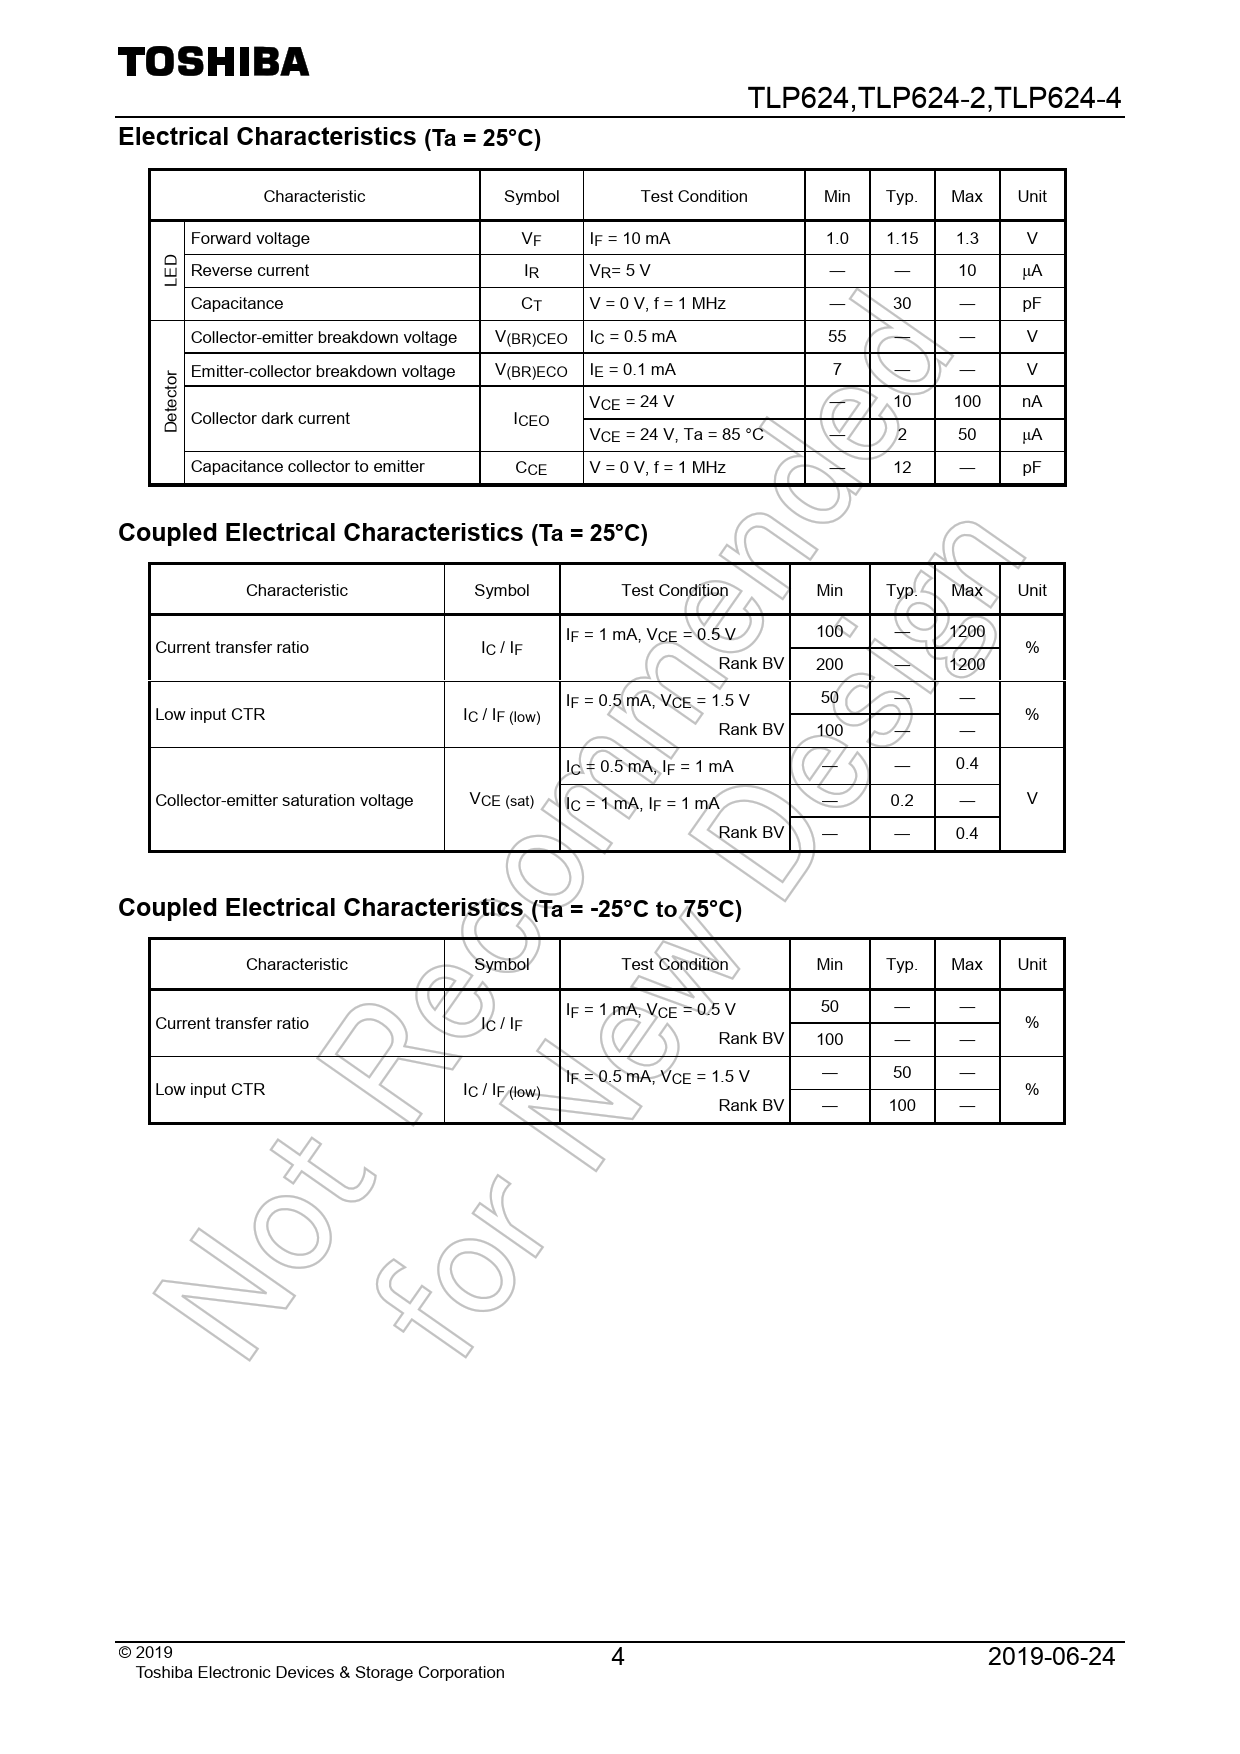 Electrical Characteristics (Ta = 25°C) Coupled Electrical Characteristics (Ta = 25°C)